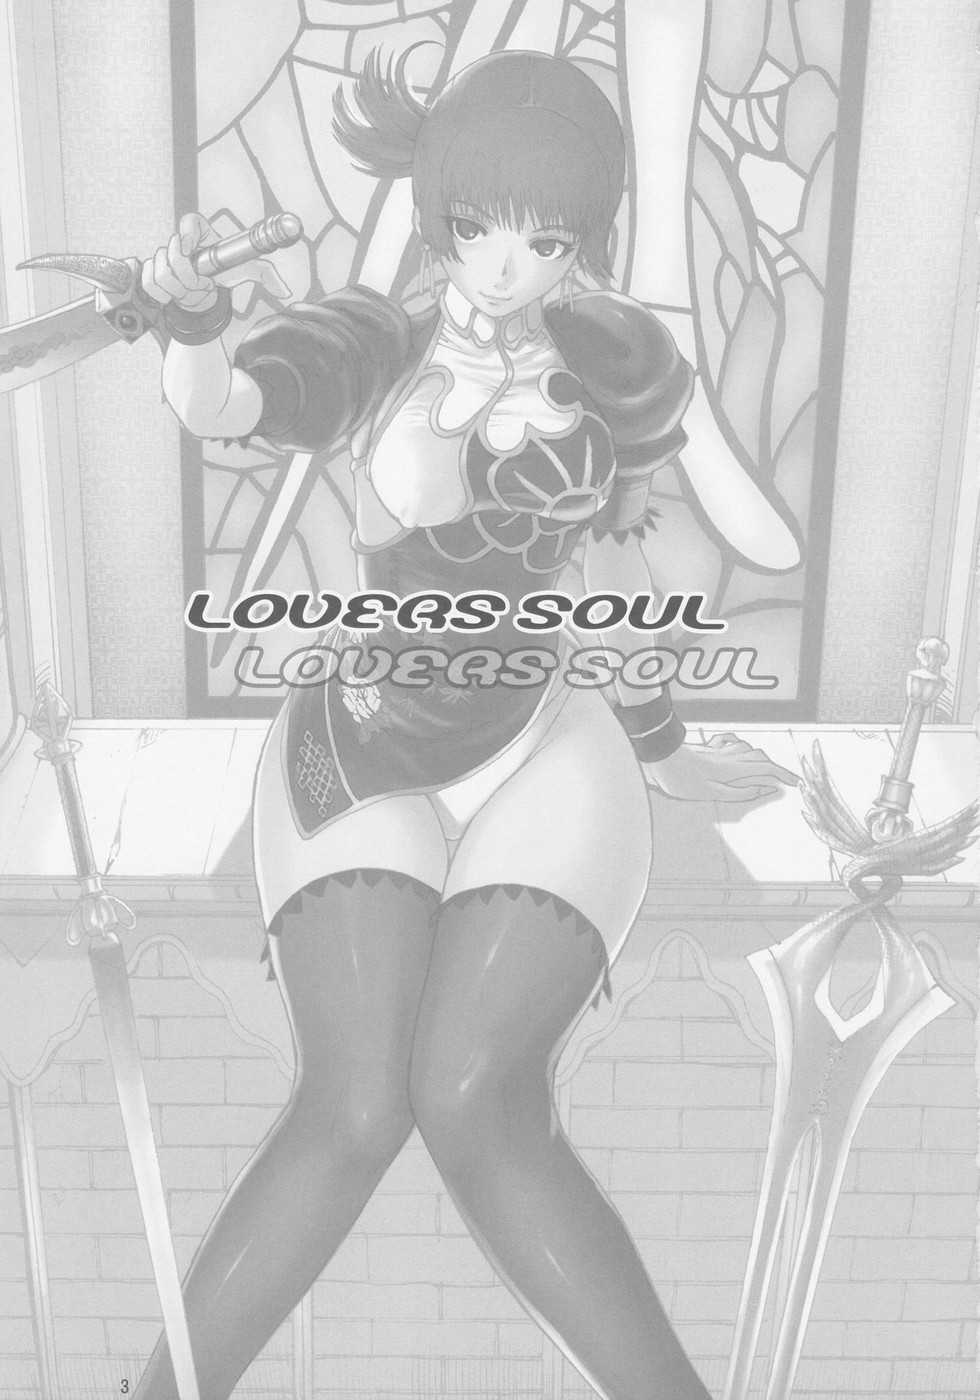 [Pururun Esthe] Lovers Soul (Soul Calibur II) 